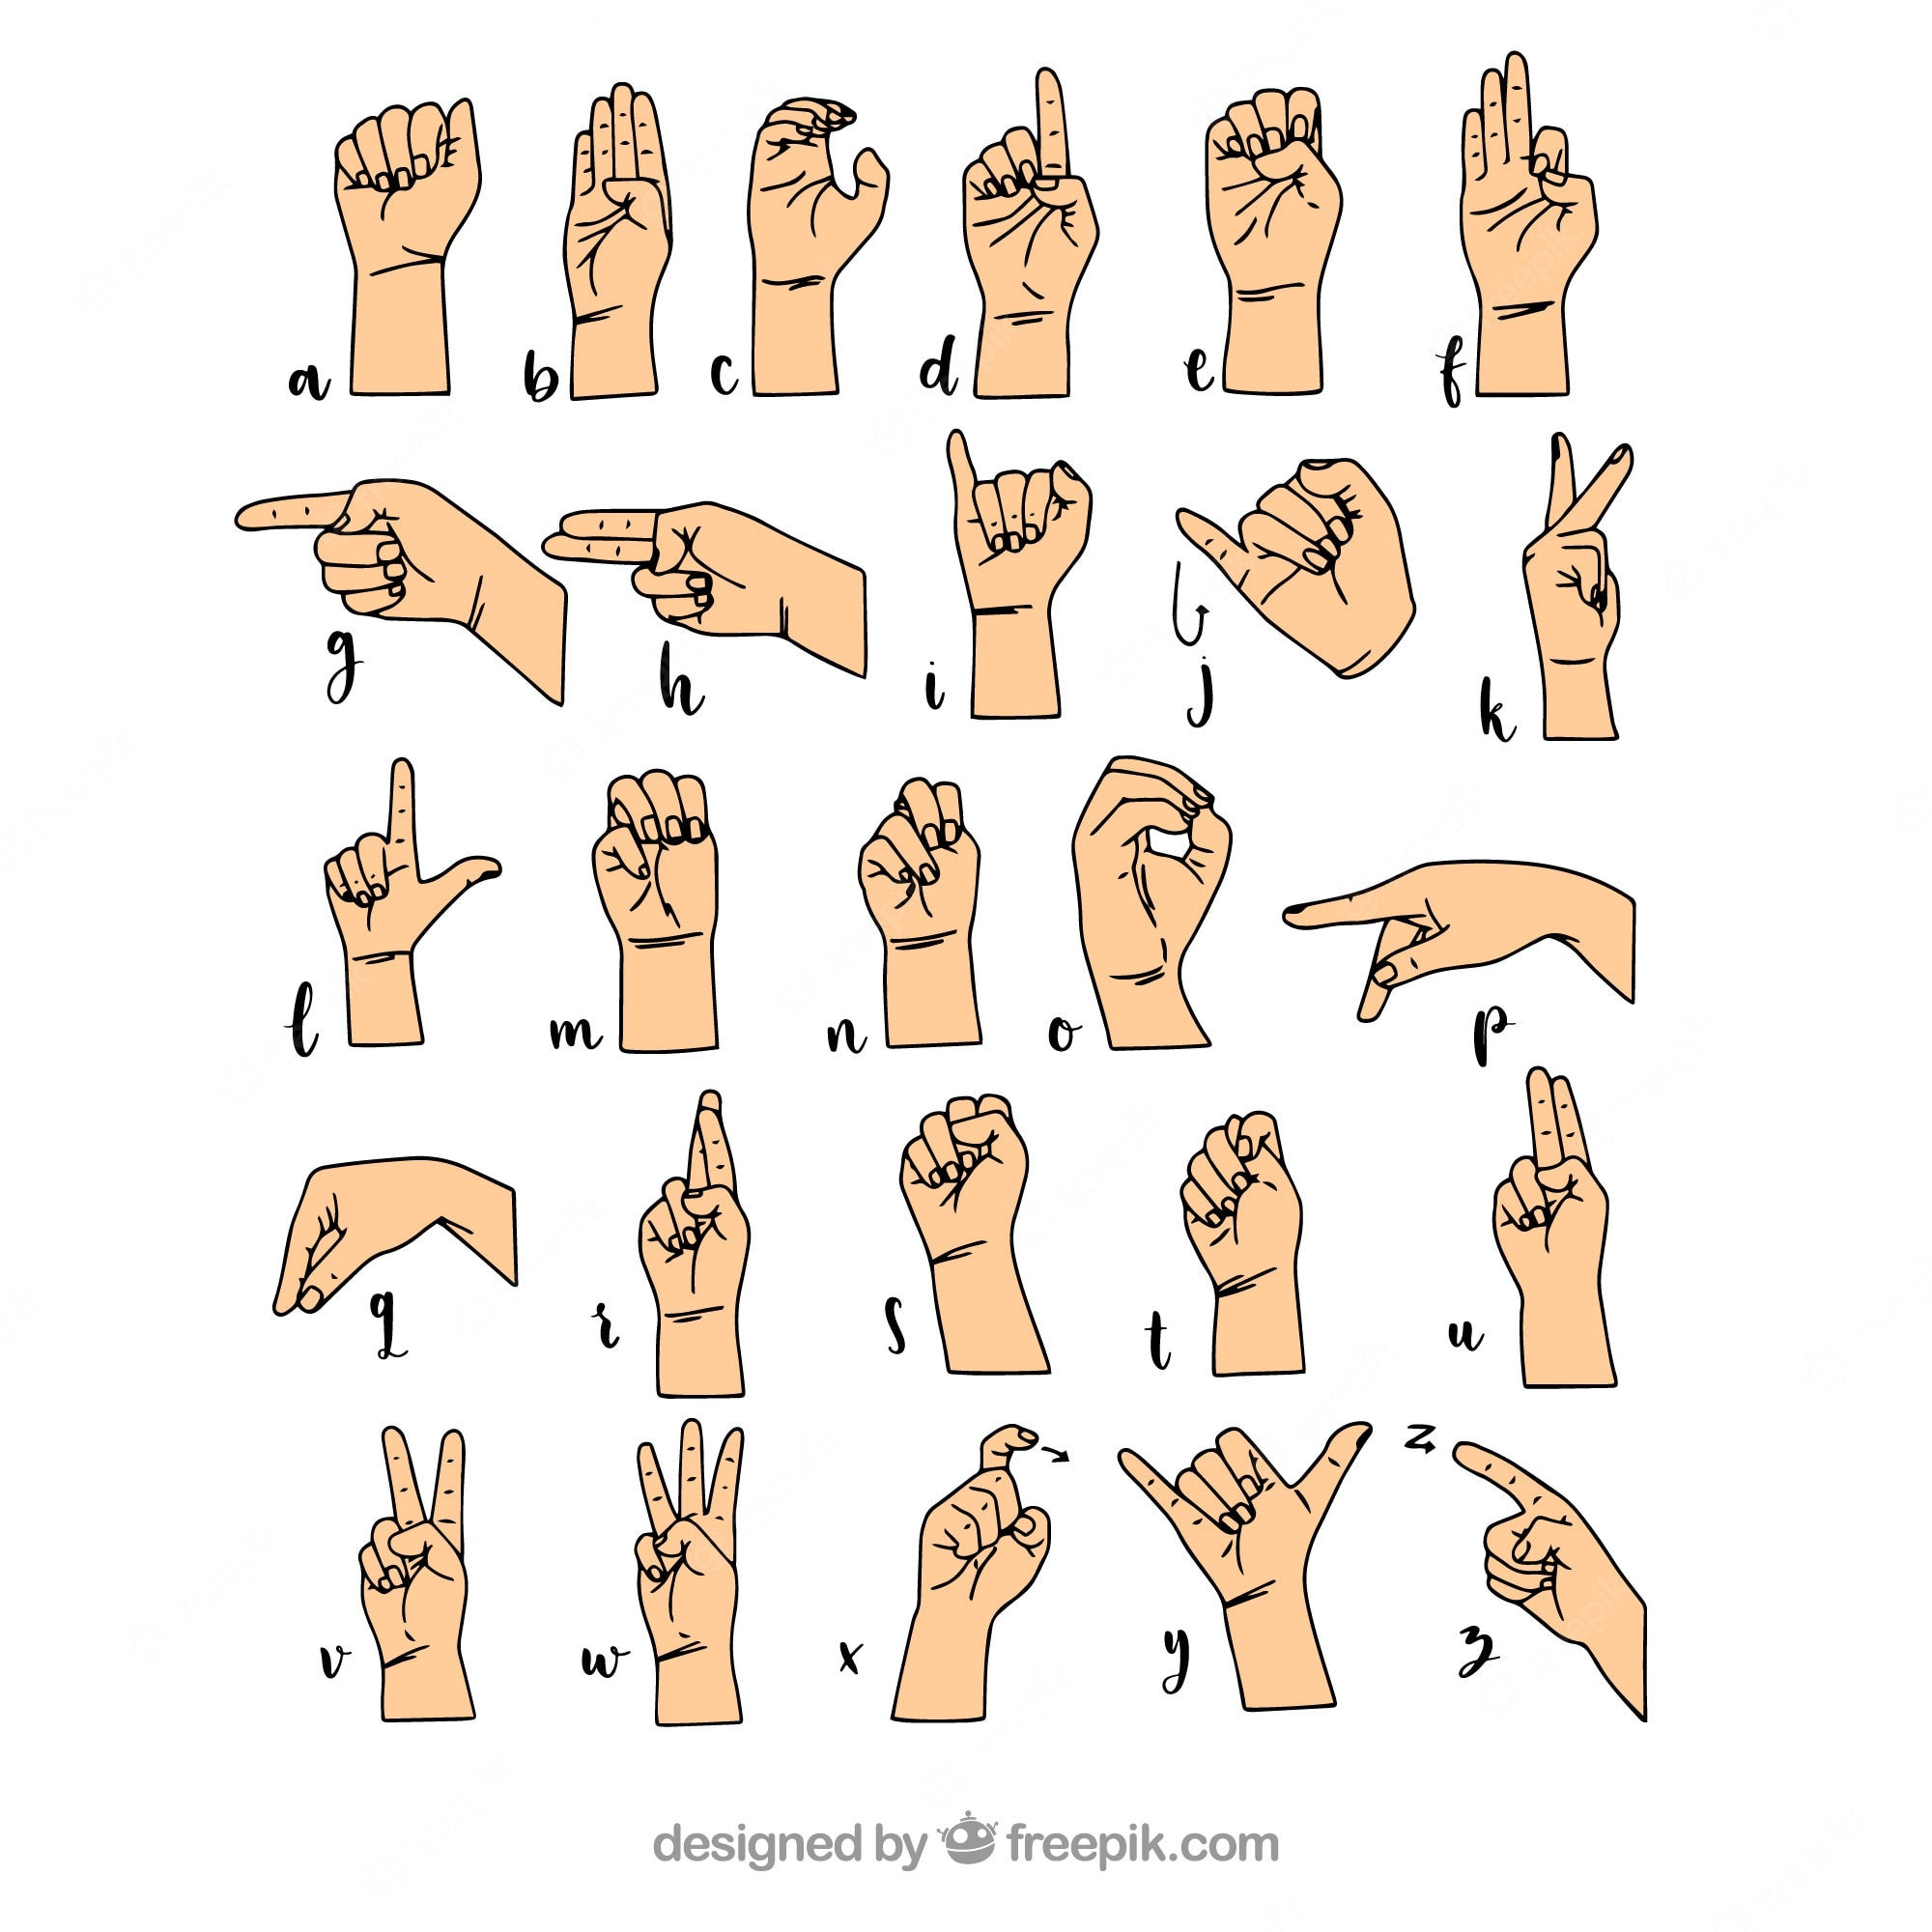 Sign Language Wallpapers